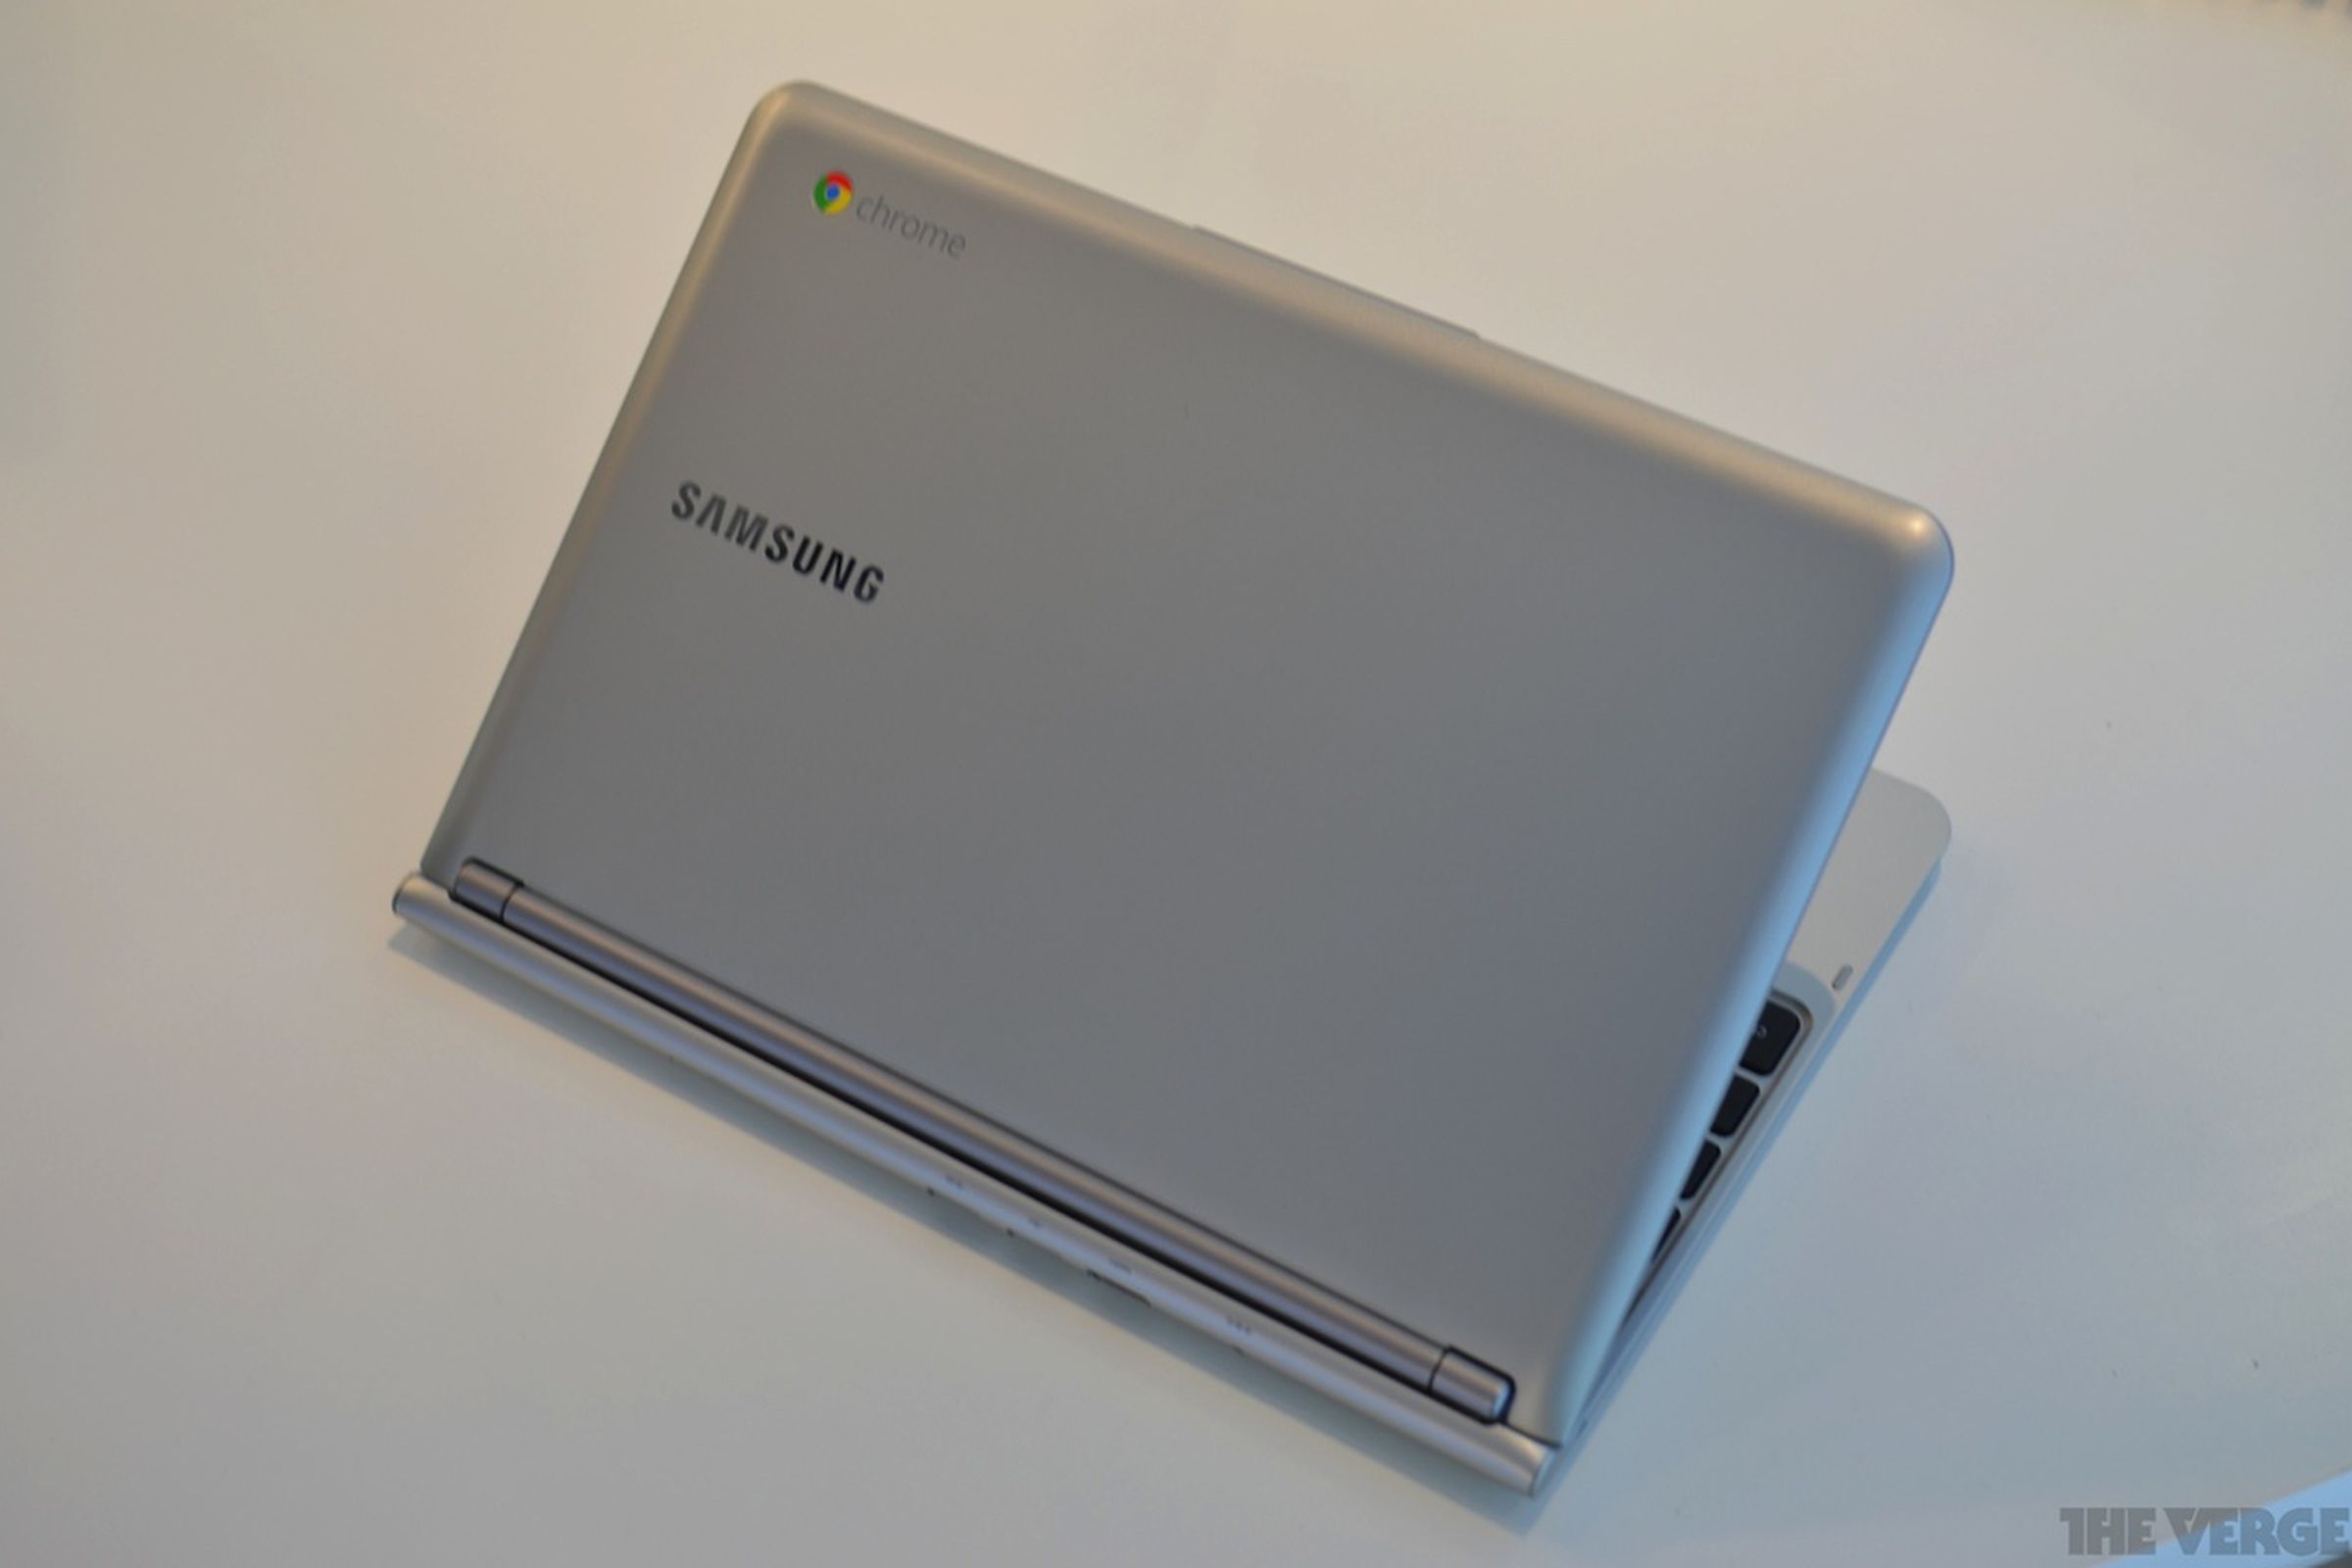 Gallery Photo: New Samsung Chromebook hands-on photos